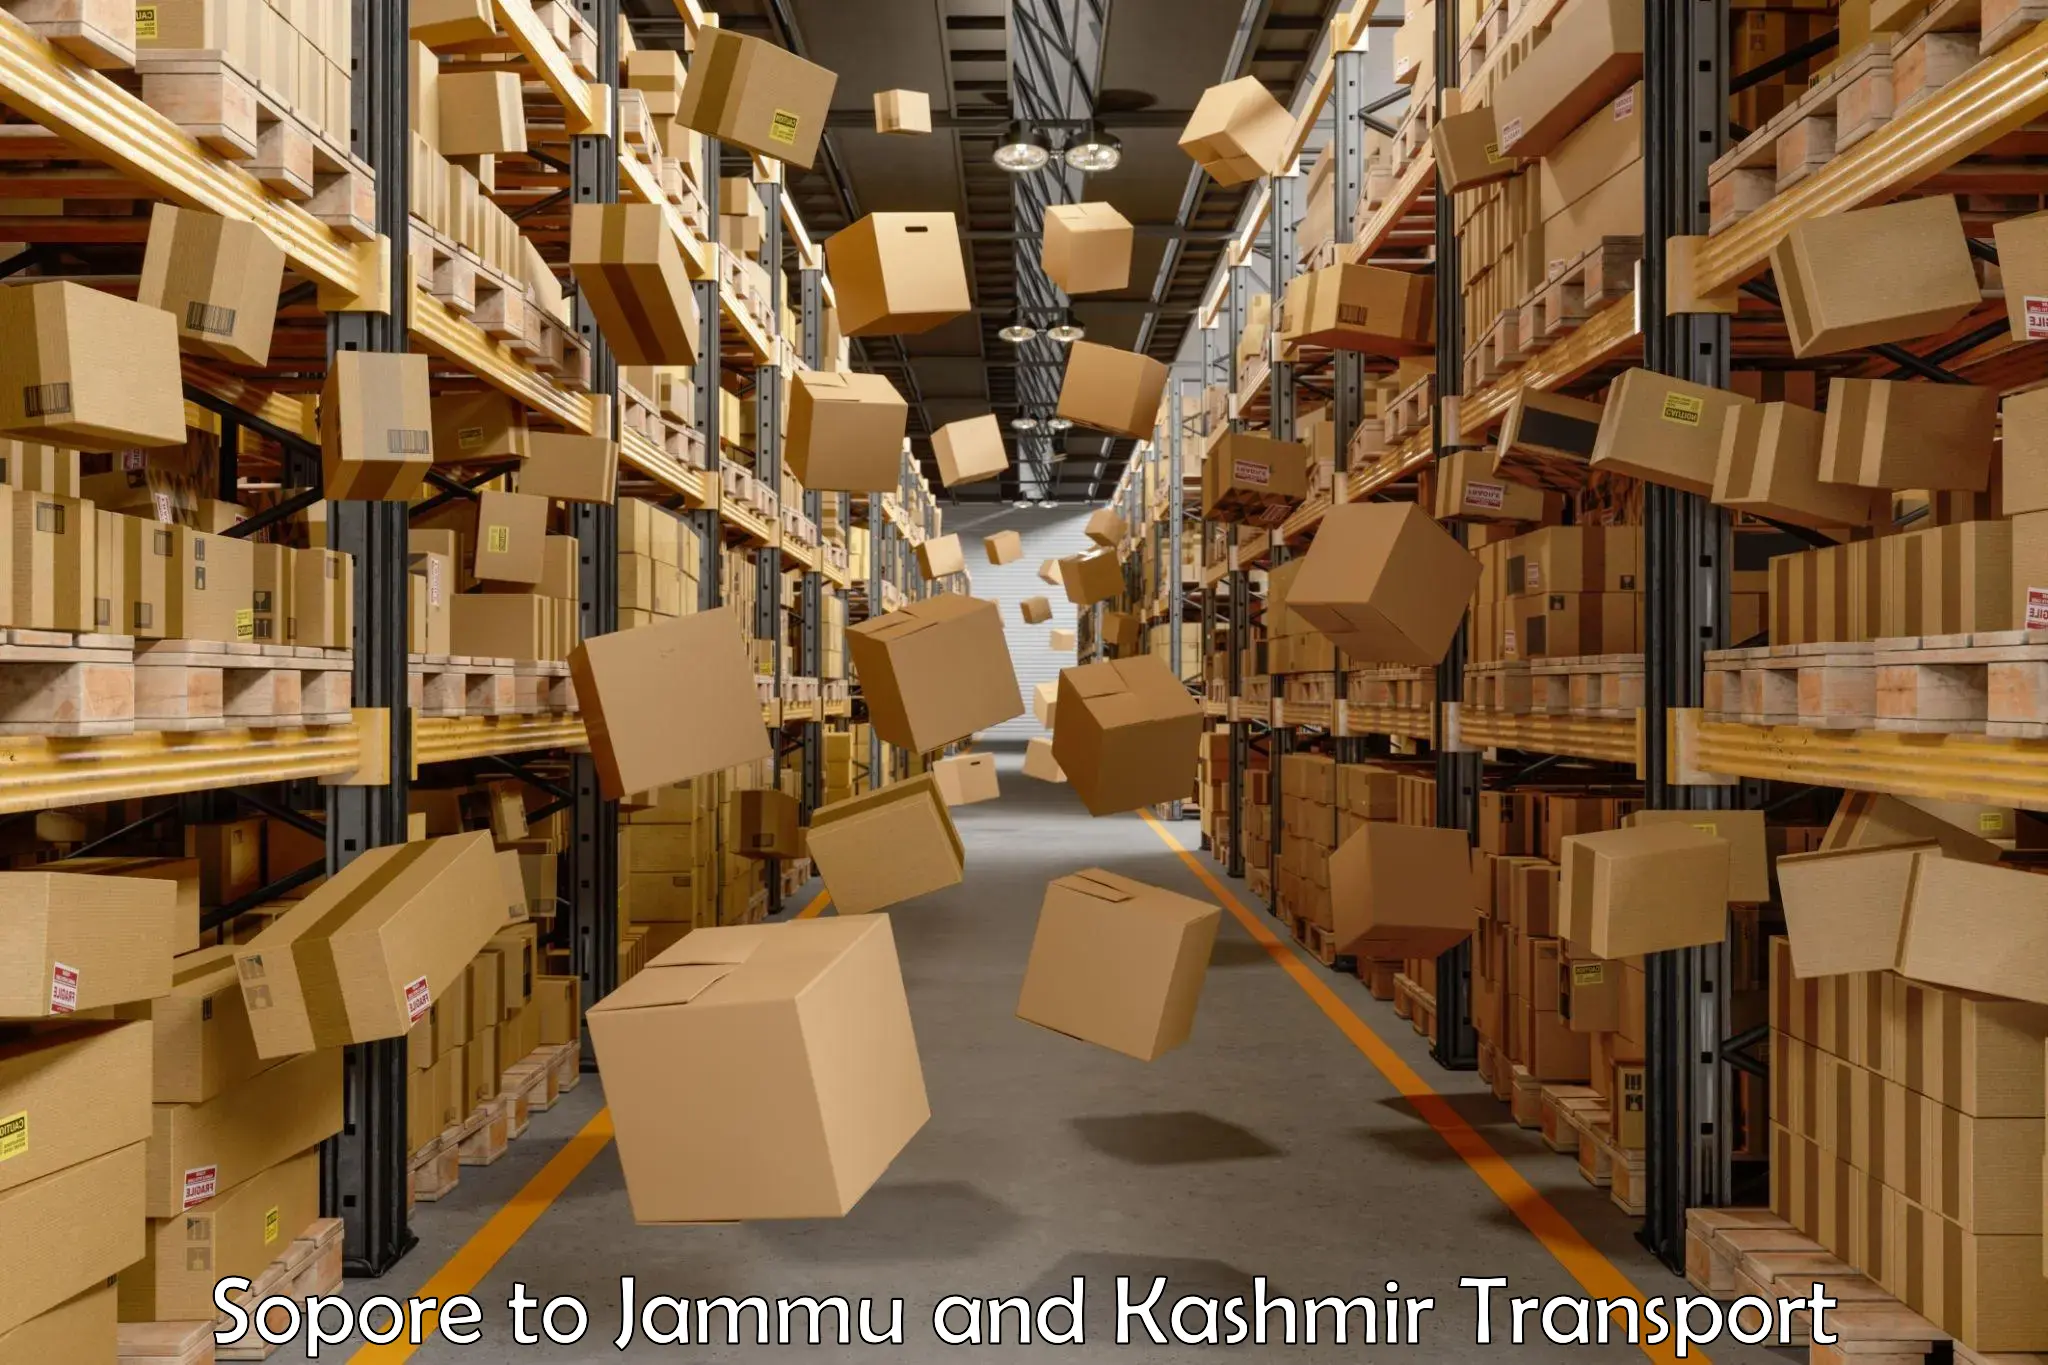 Nearest transport service Sopore to Jammu and Kashmir